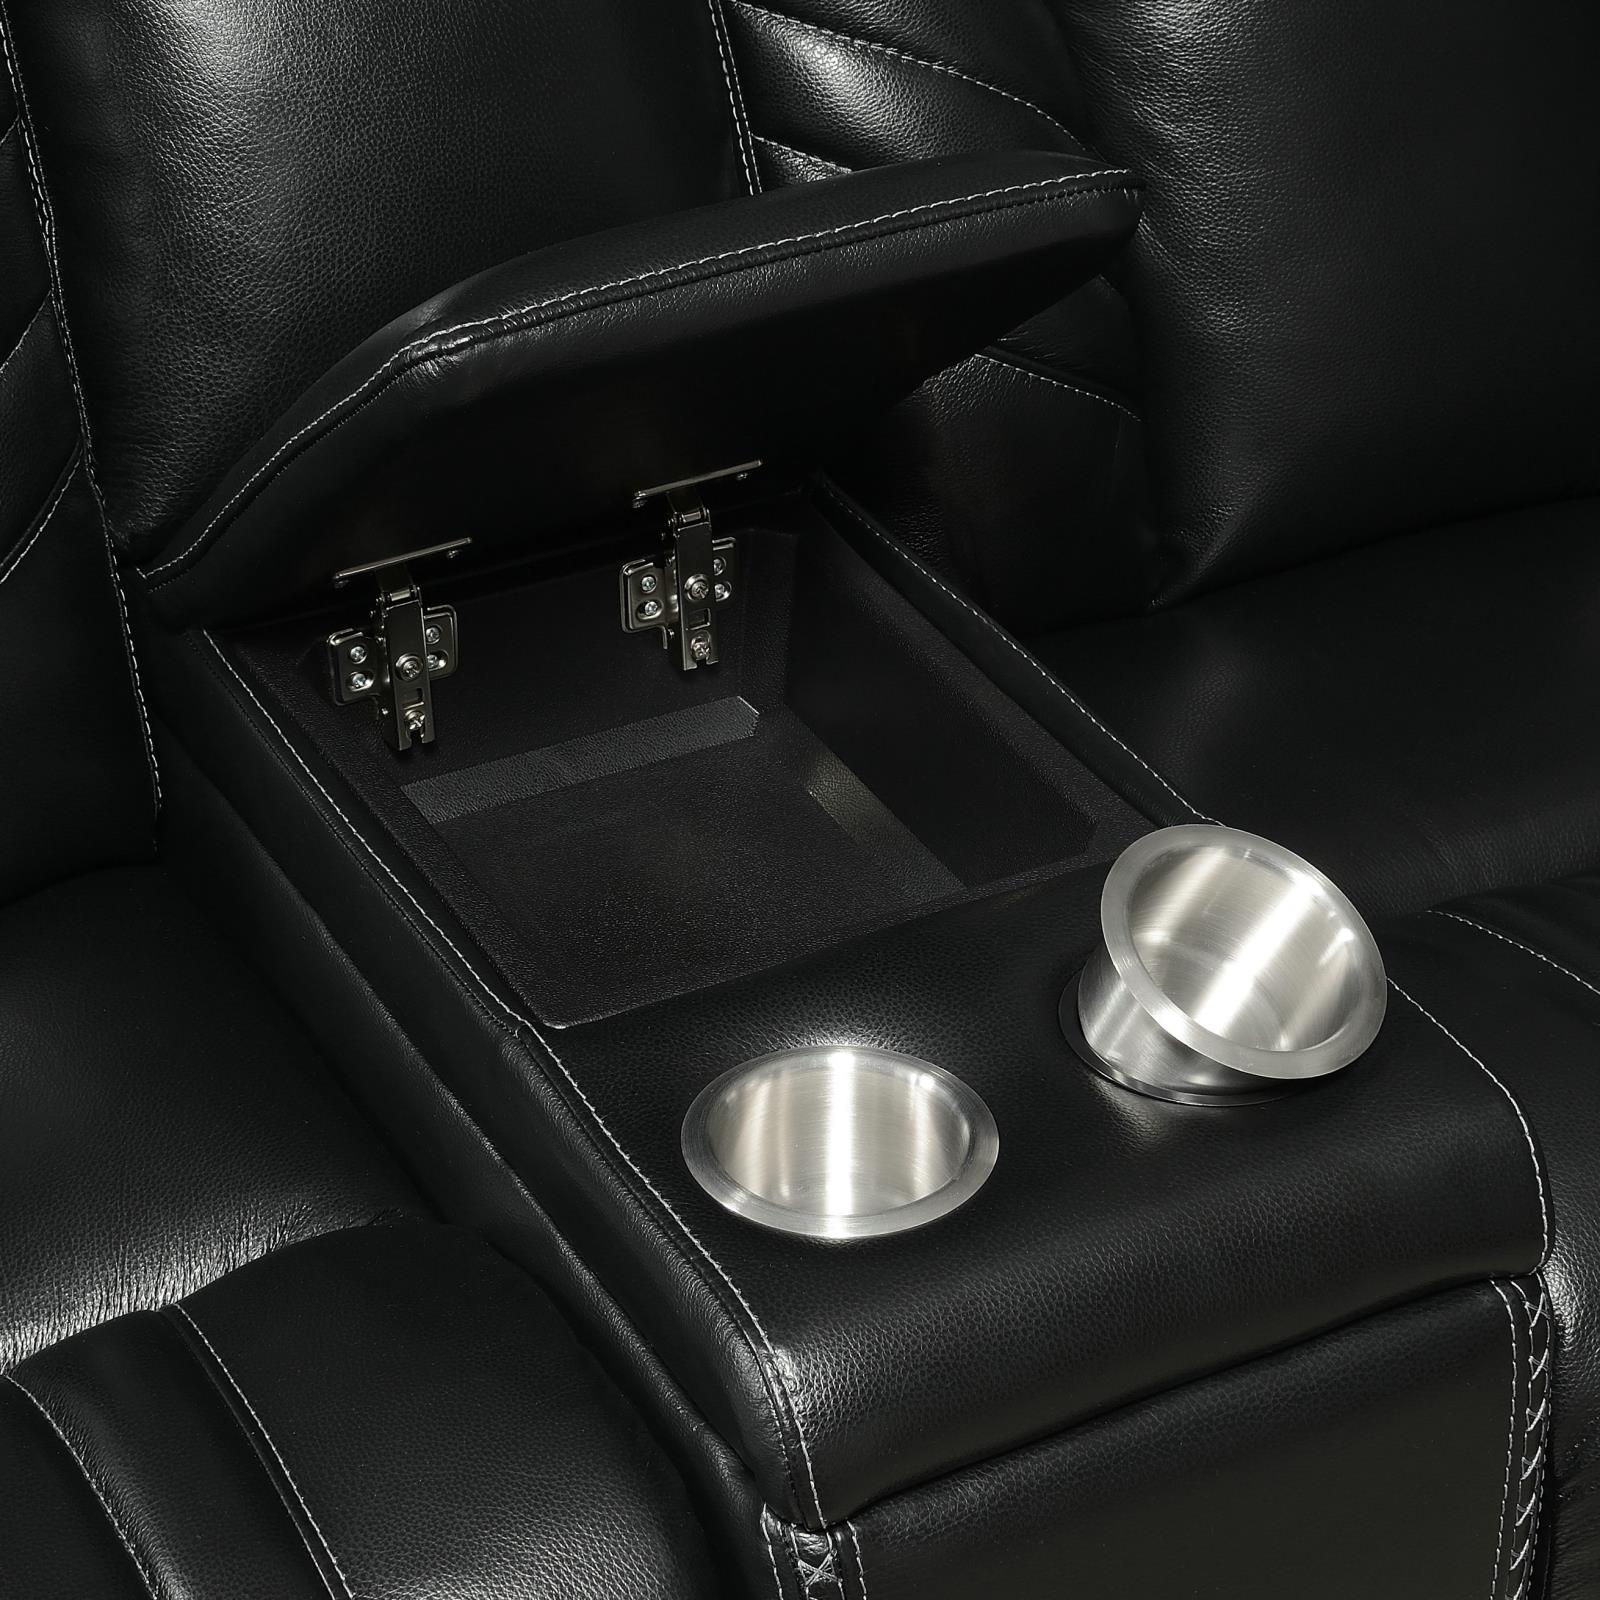 Bismark 2-piece Living Room Set with Power Headrest Black - What A Room